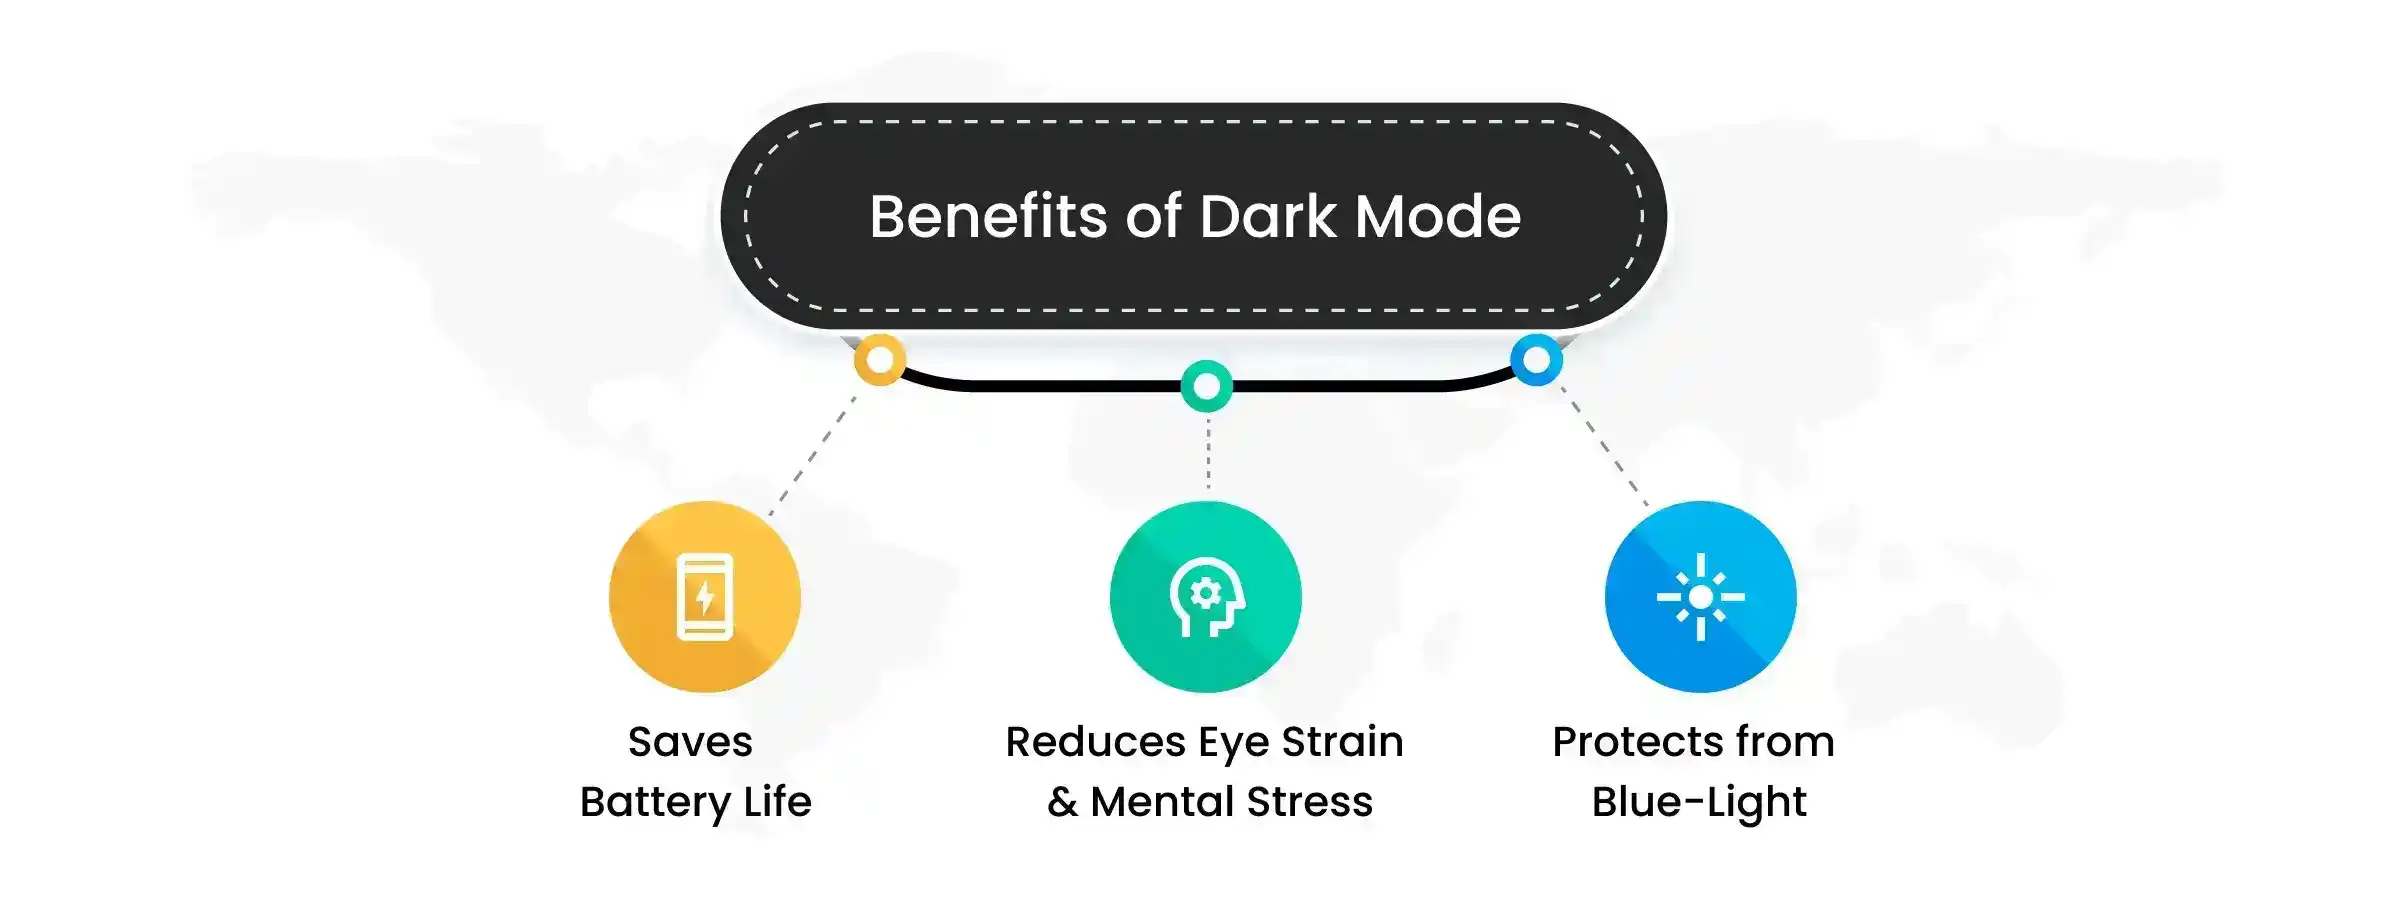 Benefits of dark mode experience